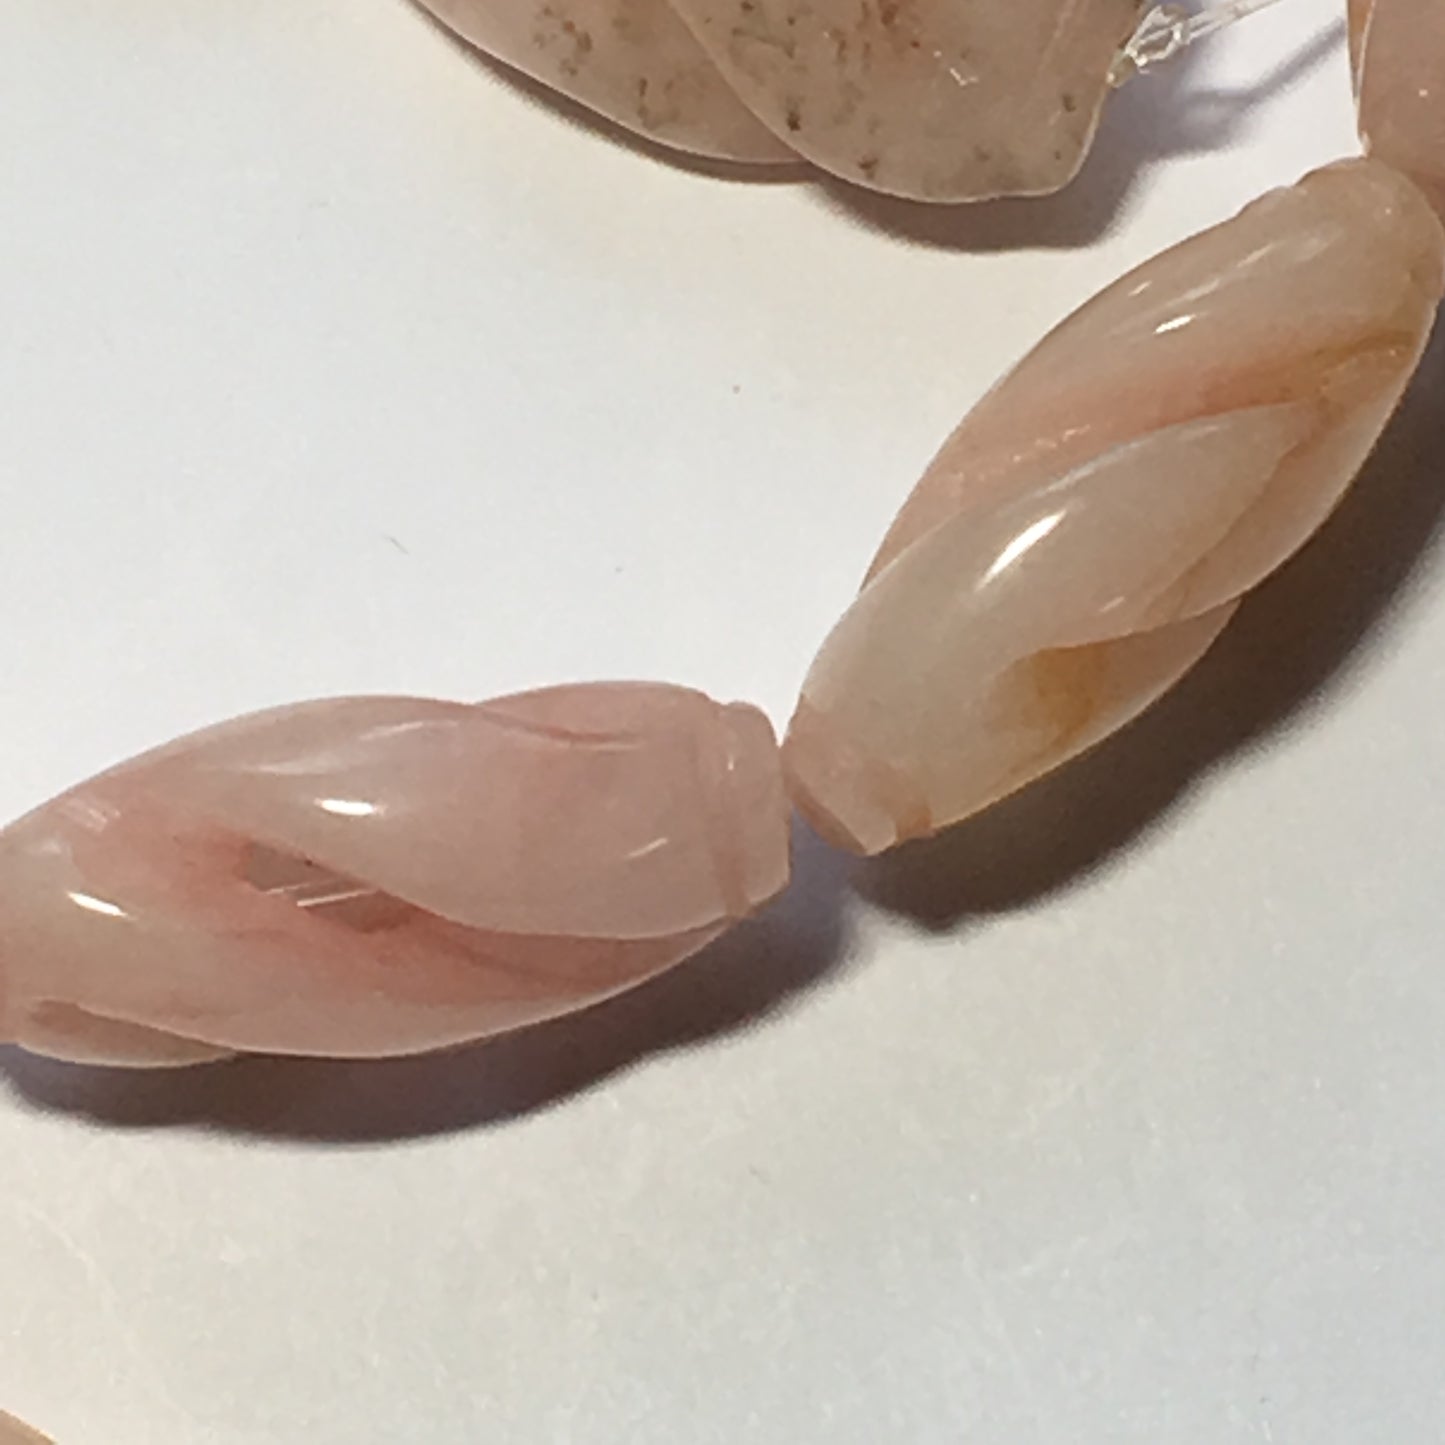 Bead Gallery Carved Peach Jade Semi-Precious Stone Oval Beads, 25 x 15 mm - 16 Beads